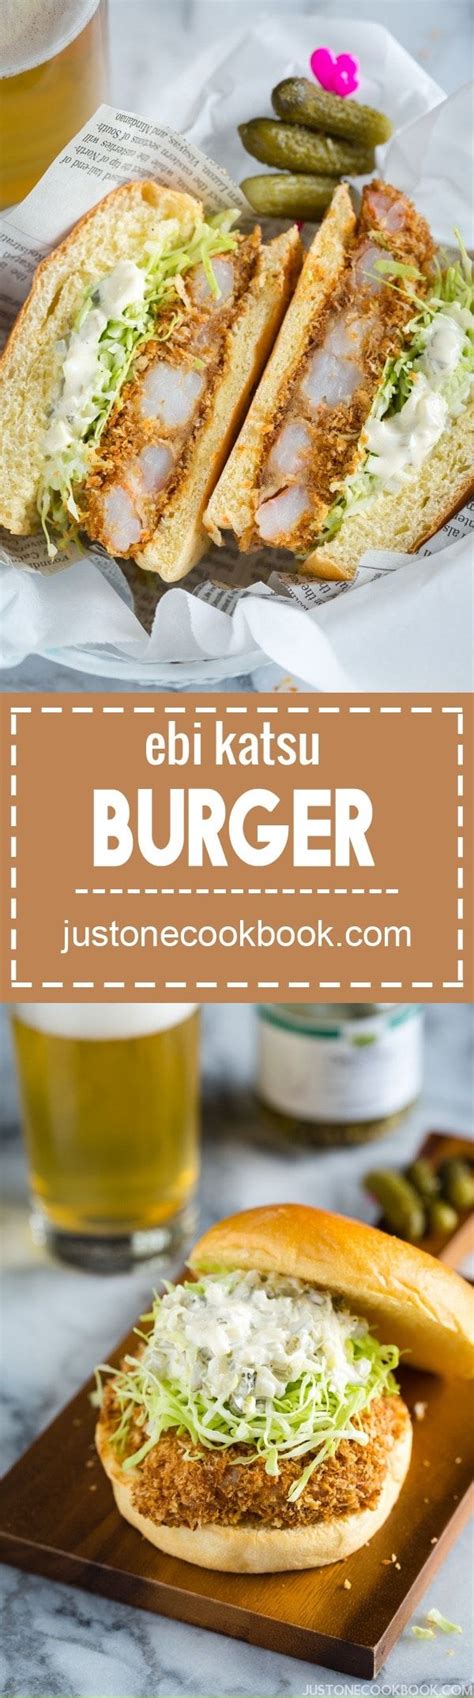 Ebi Katsu Burger 海老カツバーガー Succulent Baked Shrimp Coated With Crispy